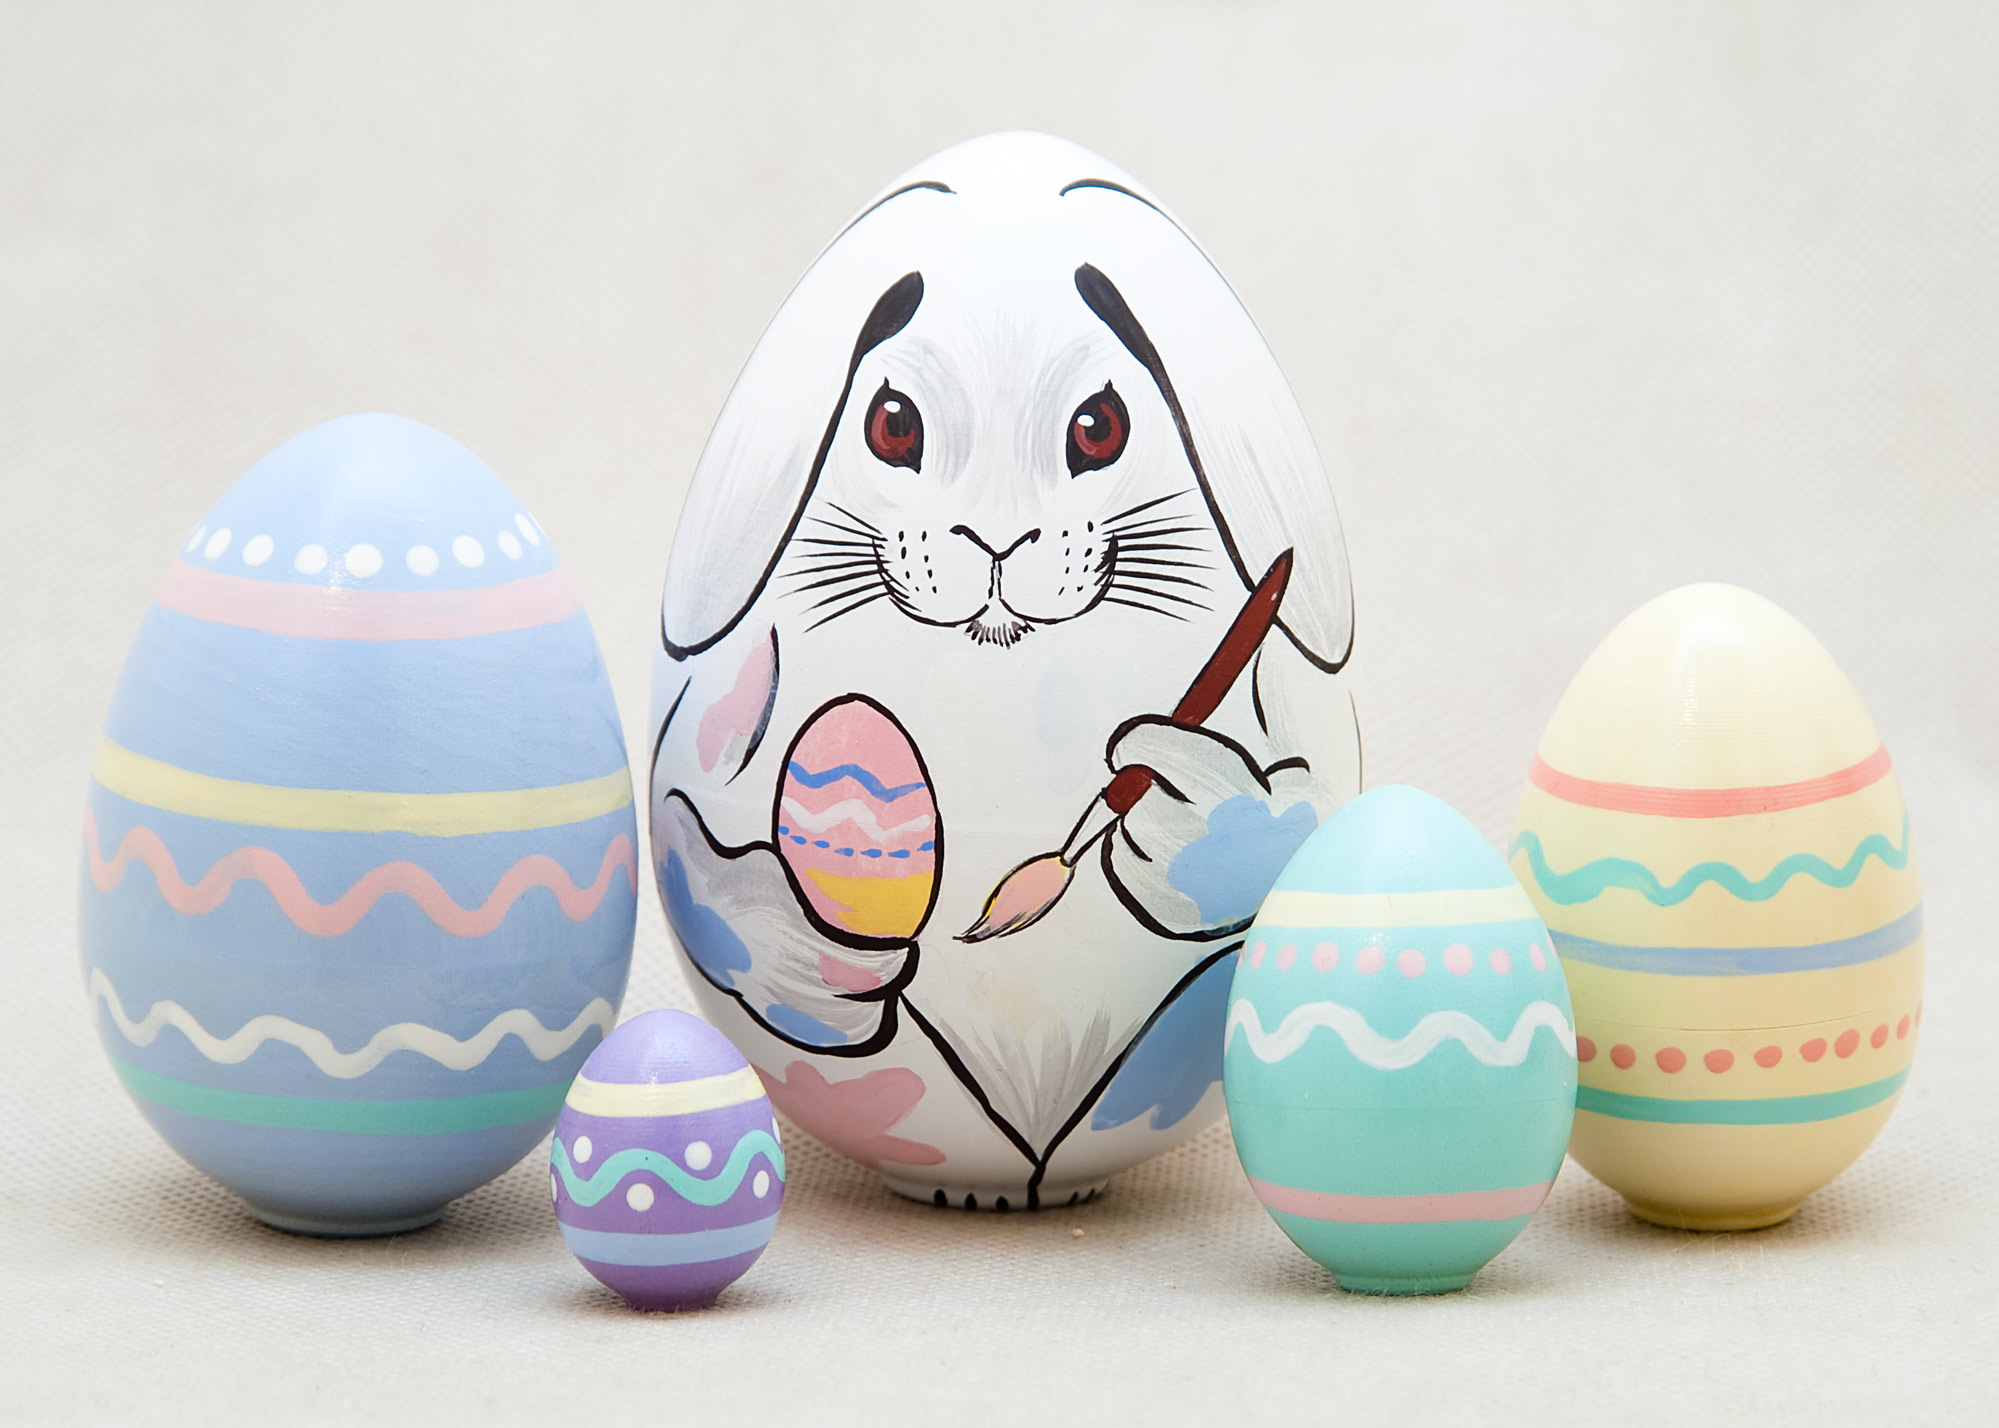 Buy Easter Bunny Nesting Egg 5pc./4" at GoldenCockerel.com